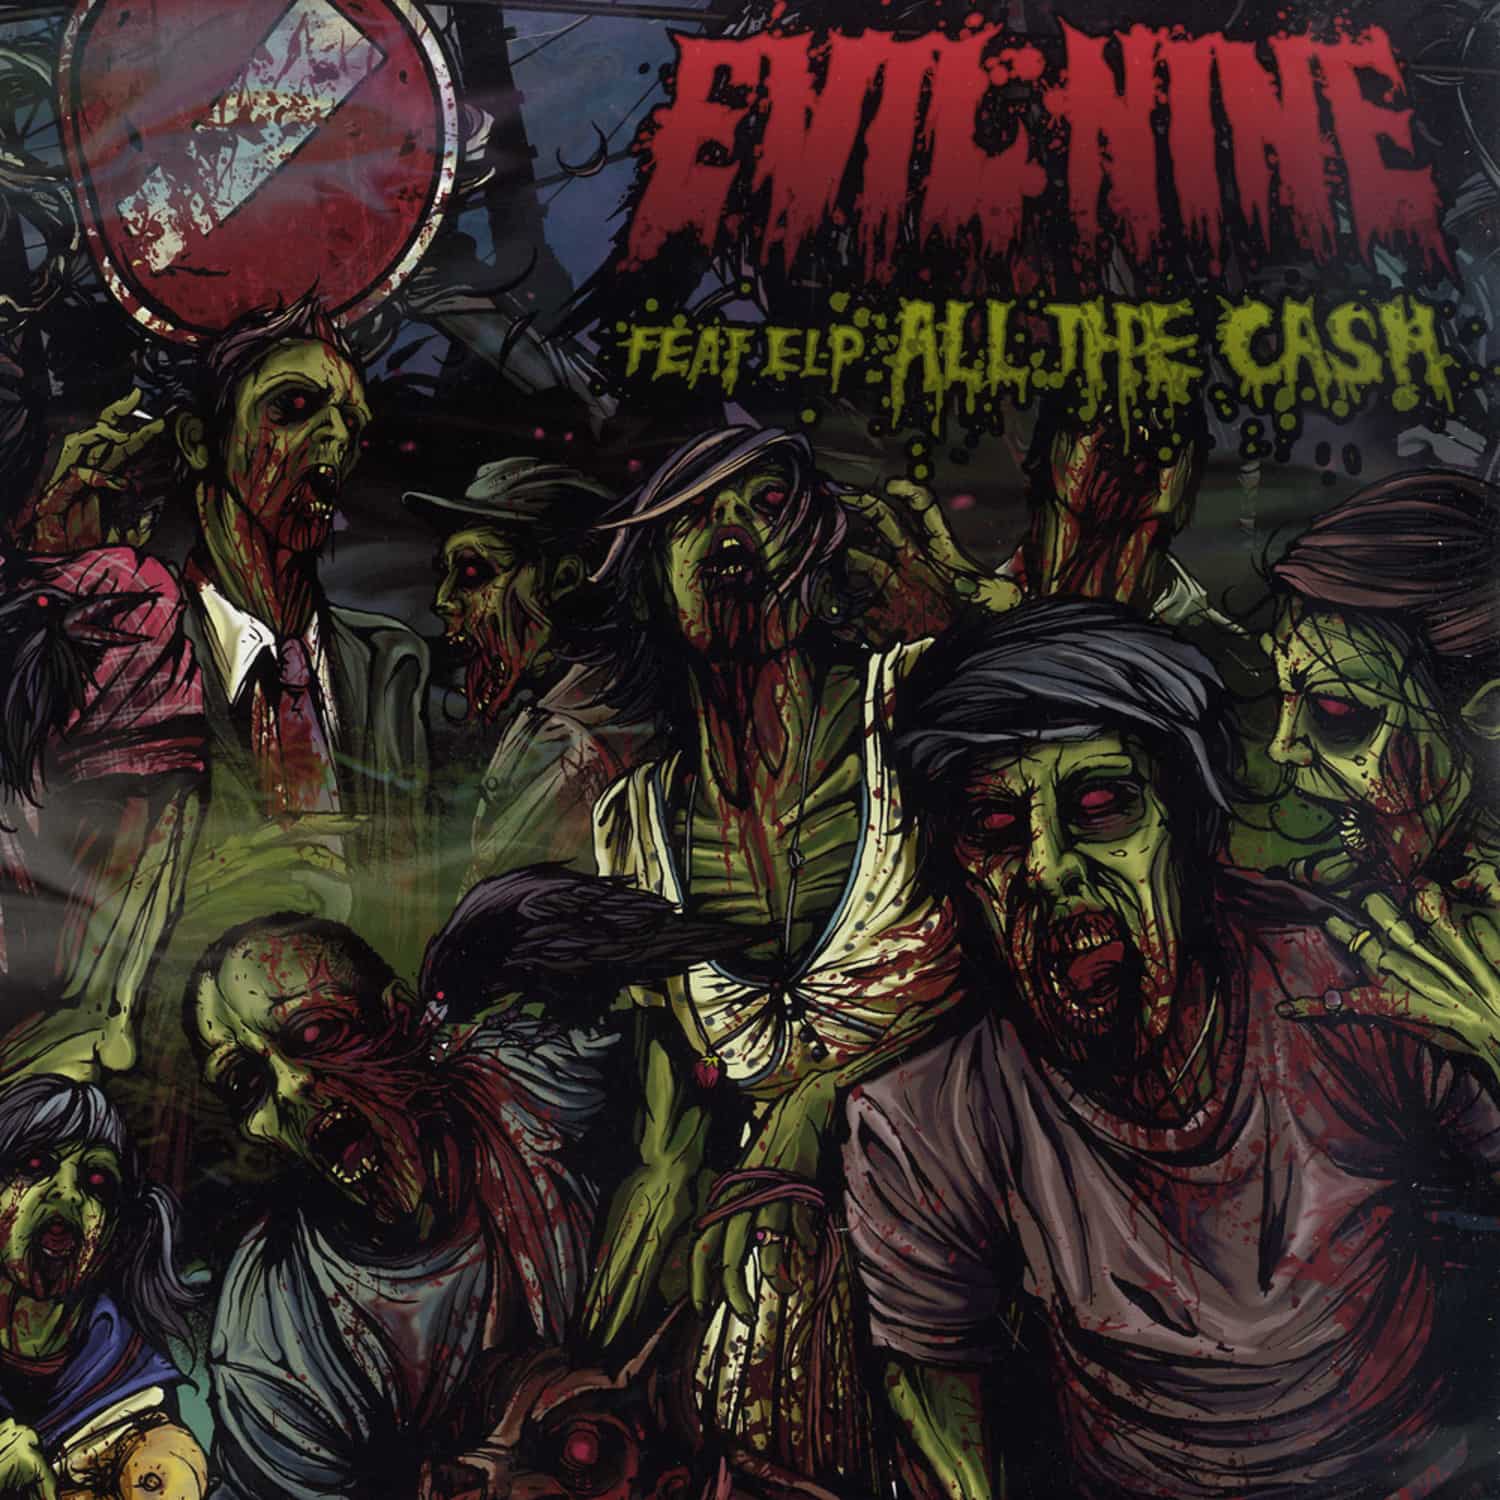 Evil Nine - ALL THE CASH